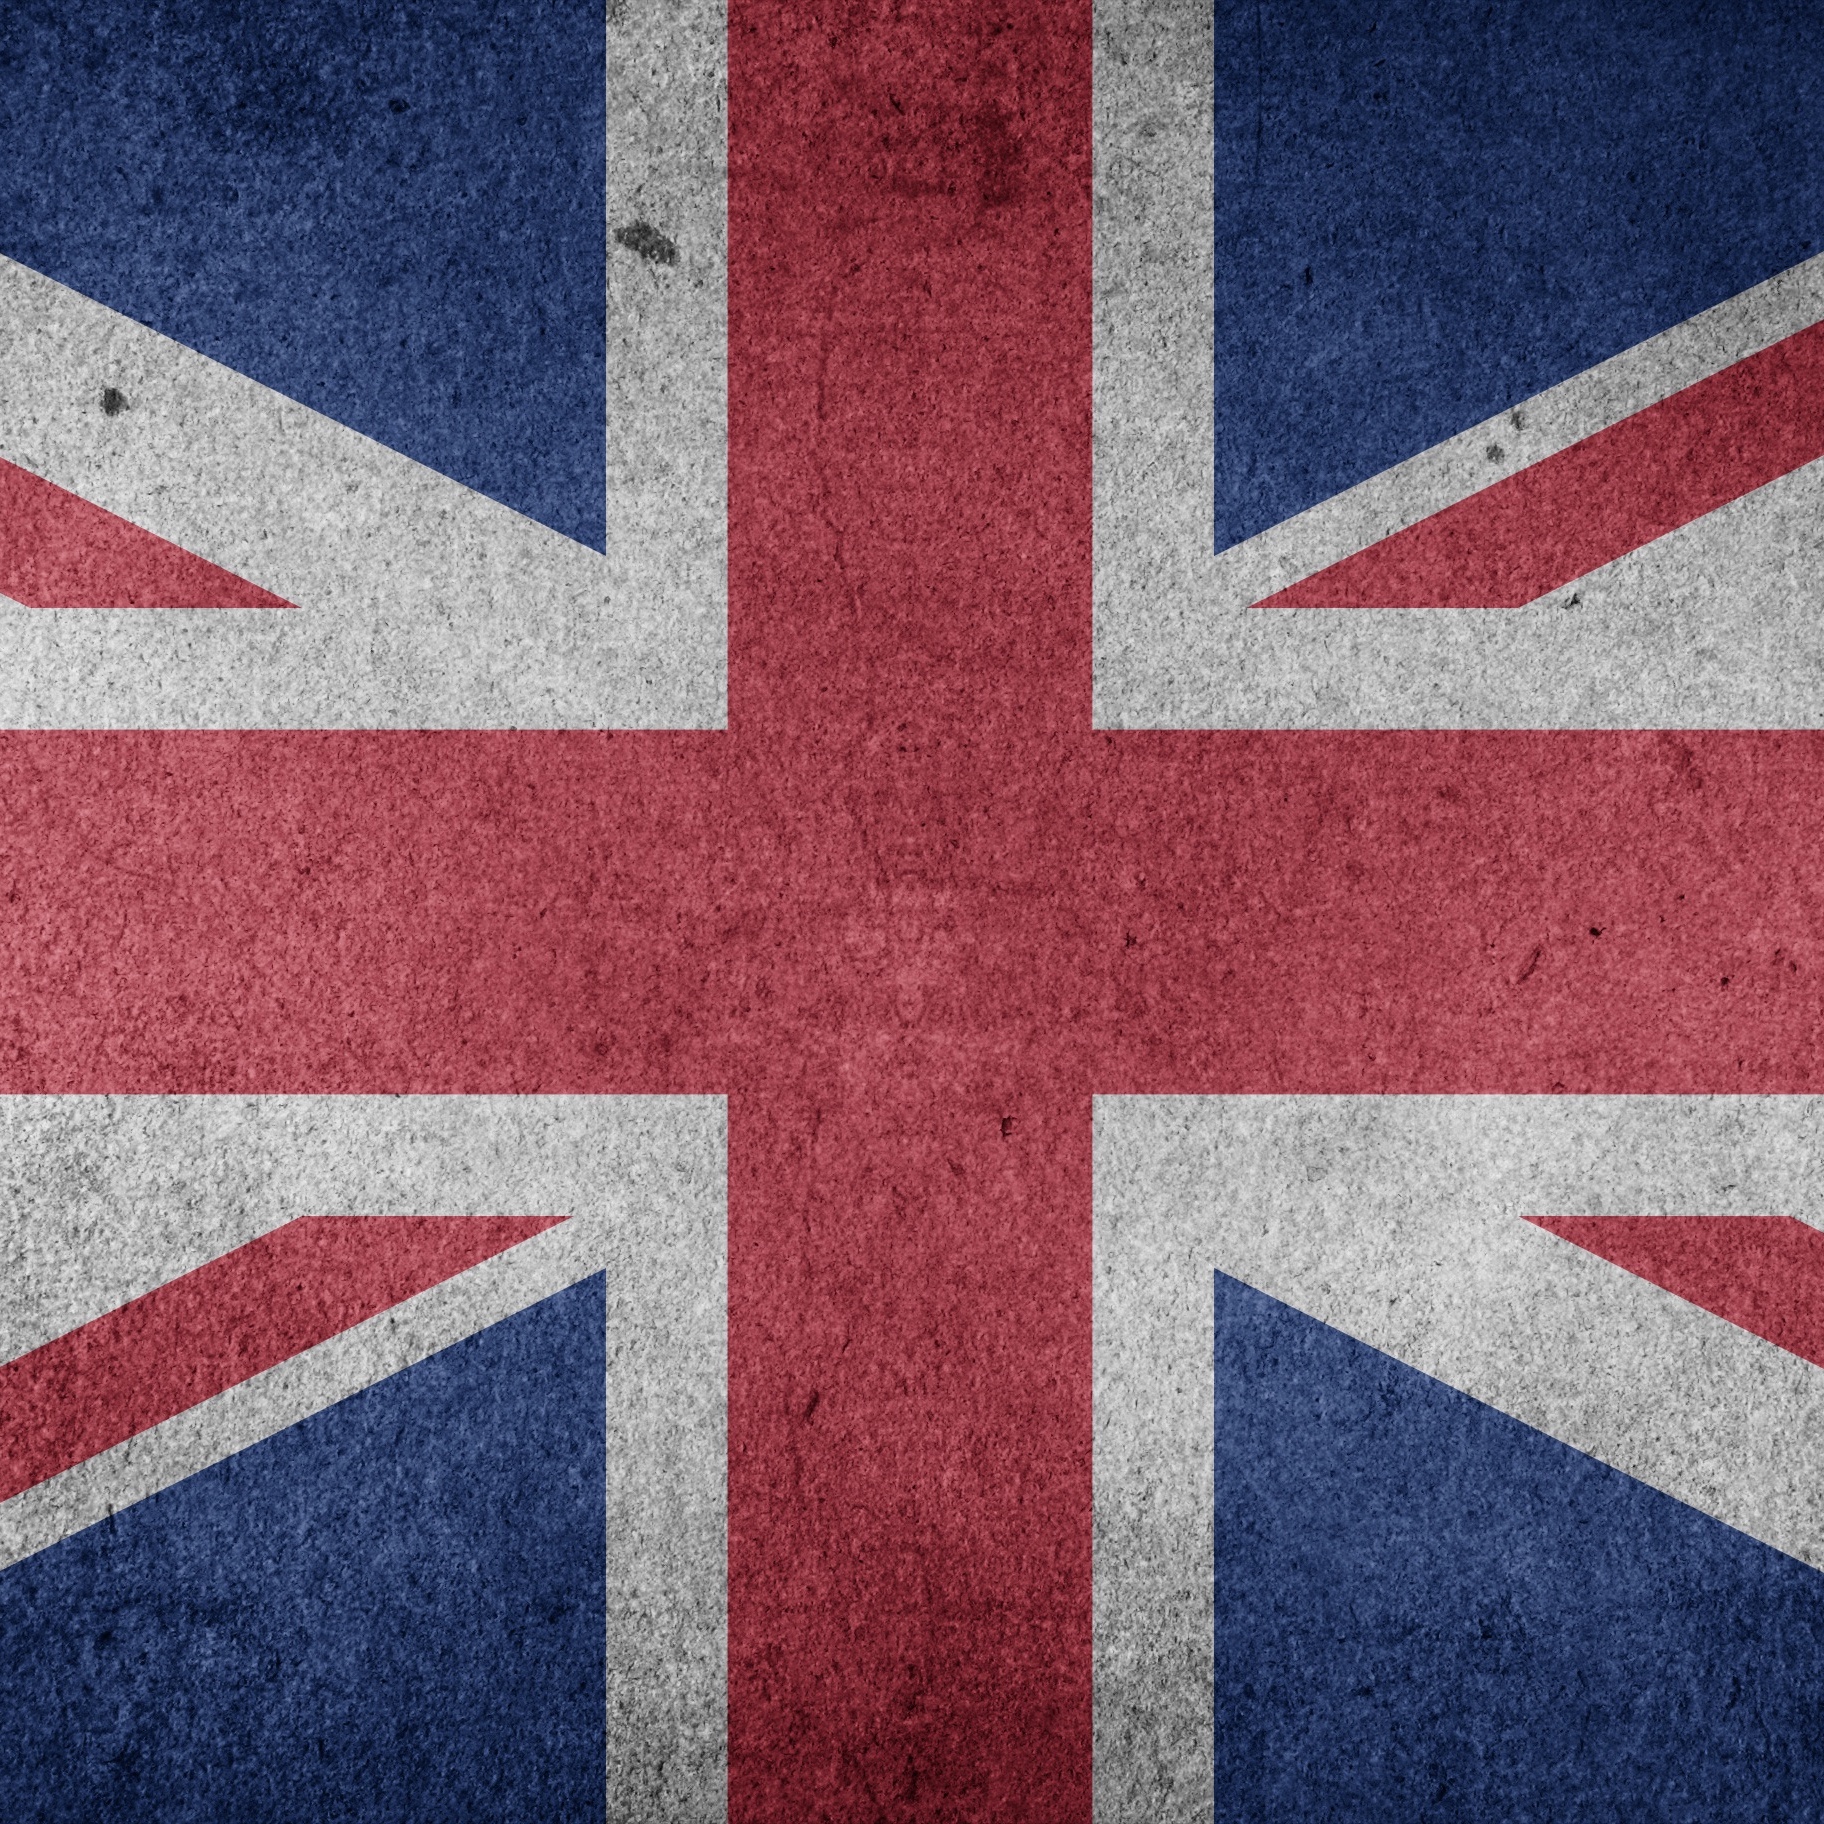 Flagge: Grossbritannien